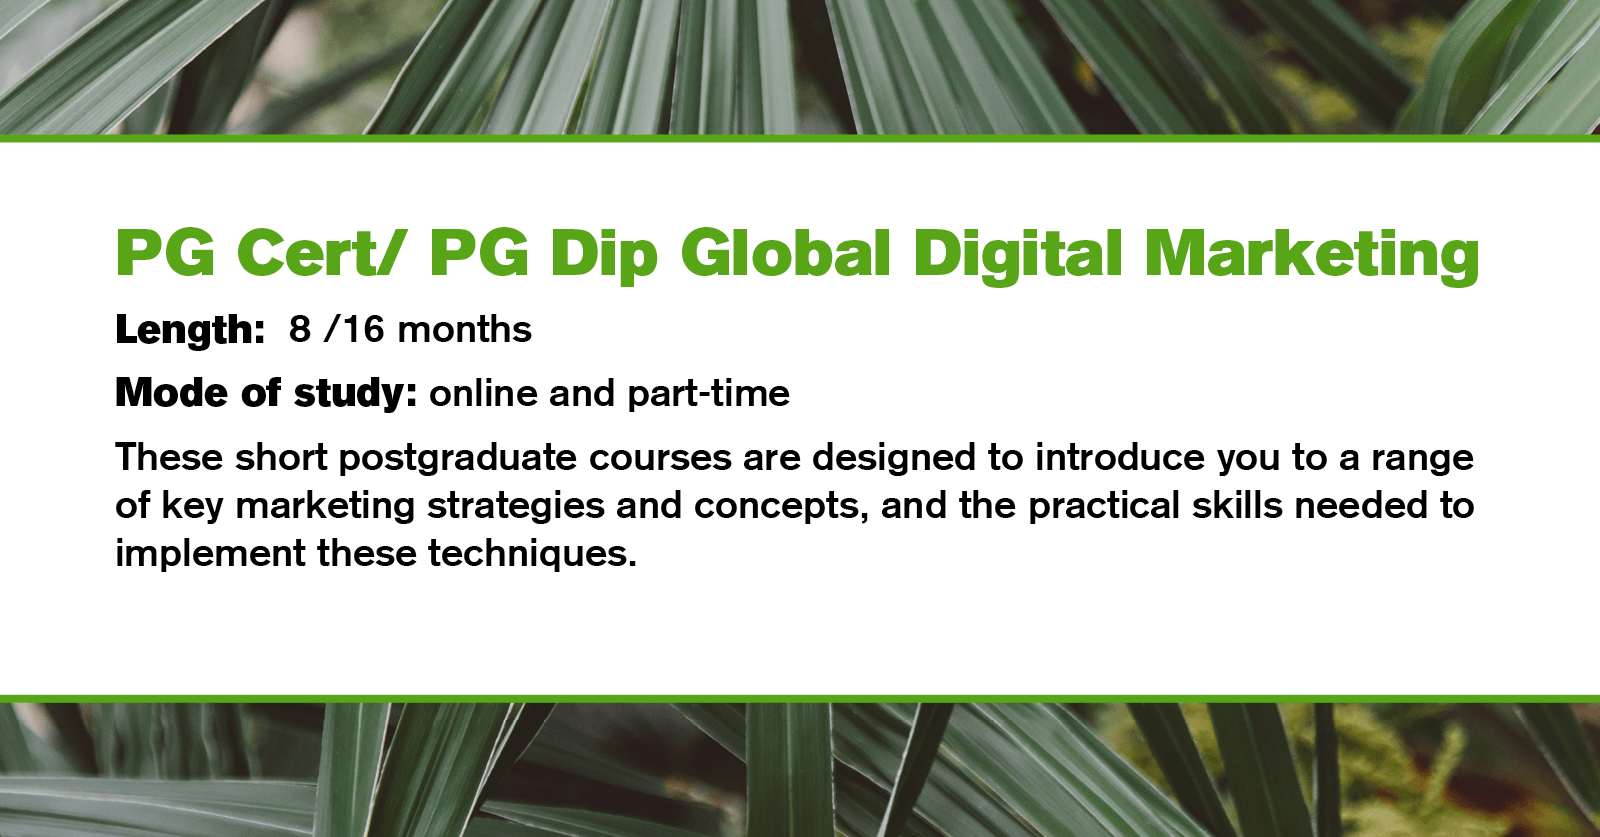 PG Cert Global Digital Marketing | Postgraduate Certificate | University of  Essex Online